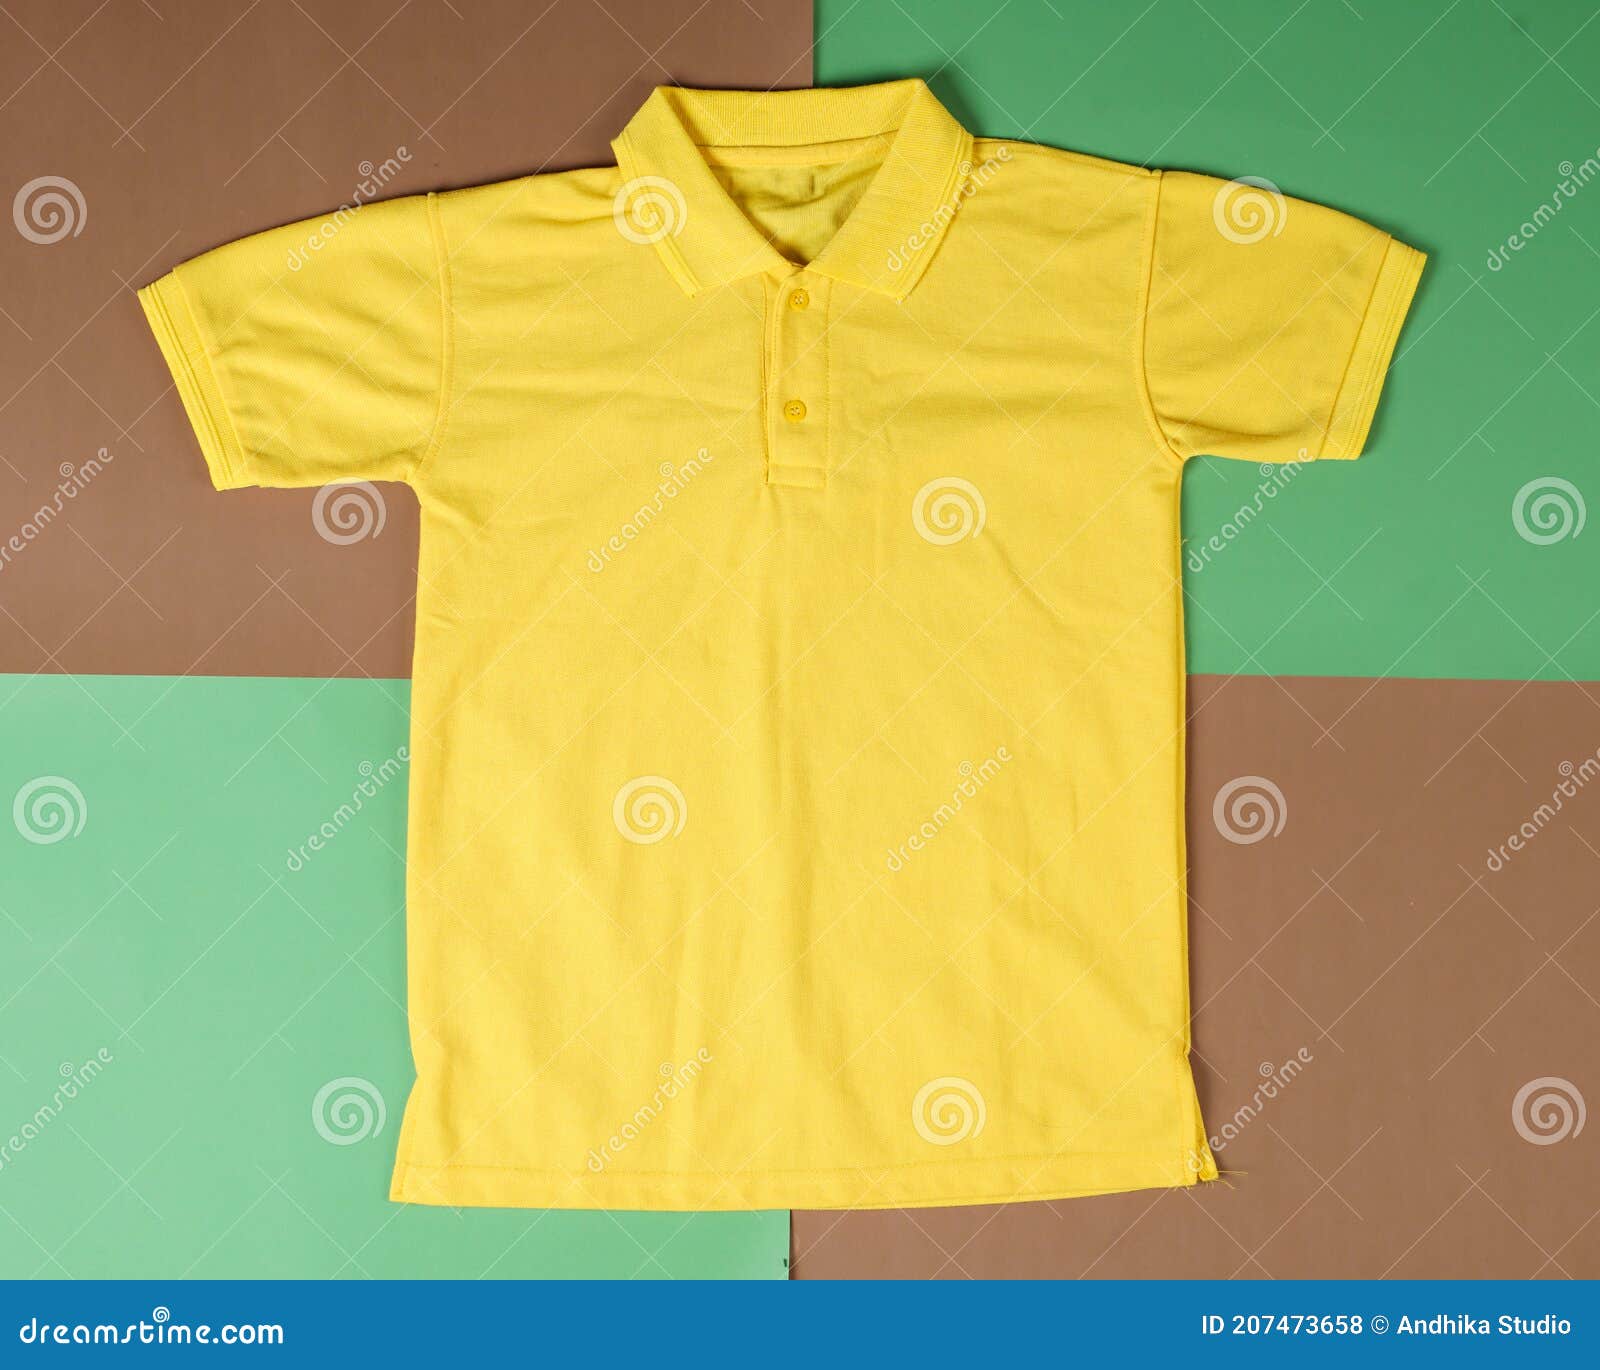 Polo Shirt Design Template and Mockup for Print. Stock Photo - Image of ...